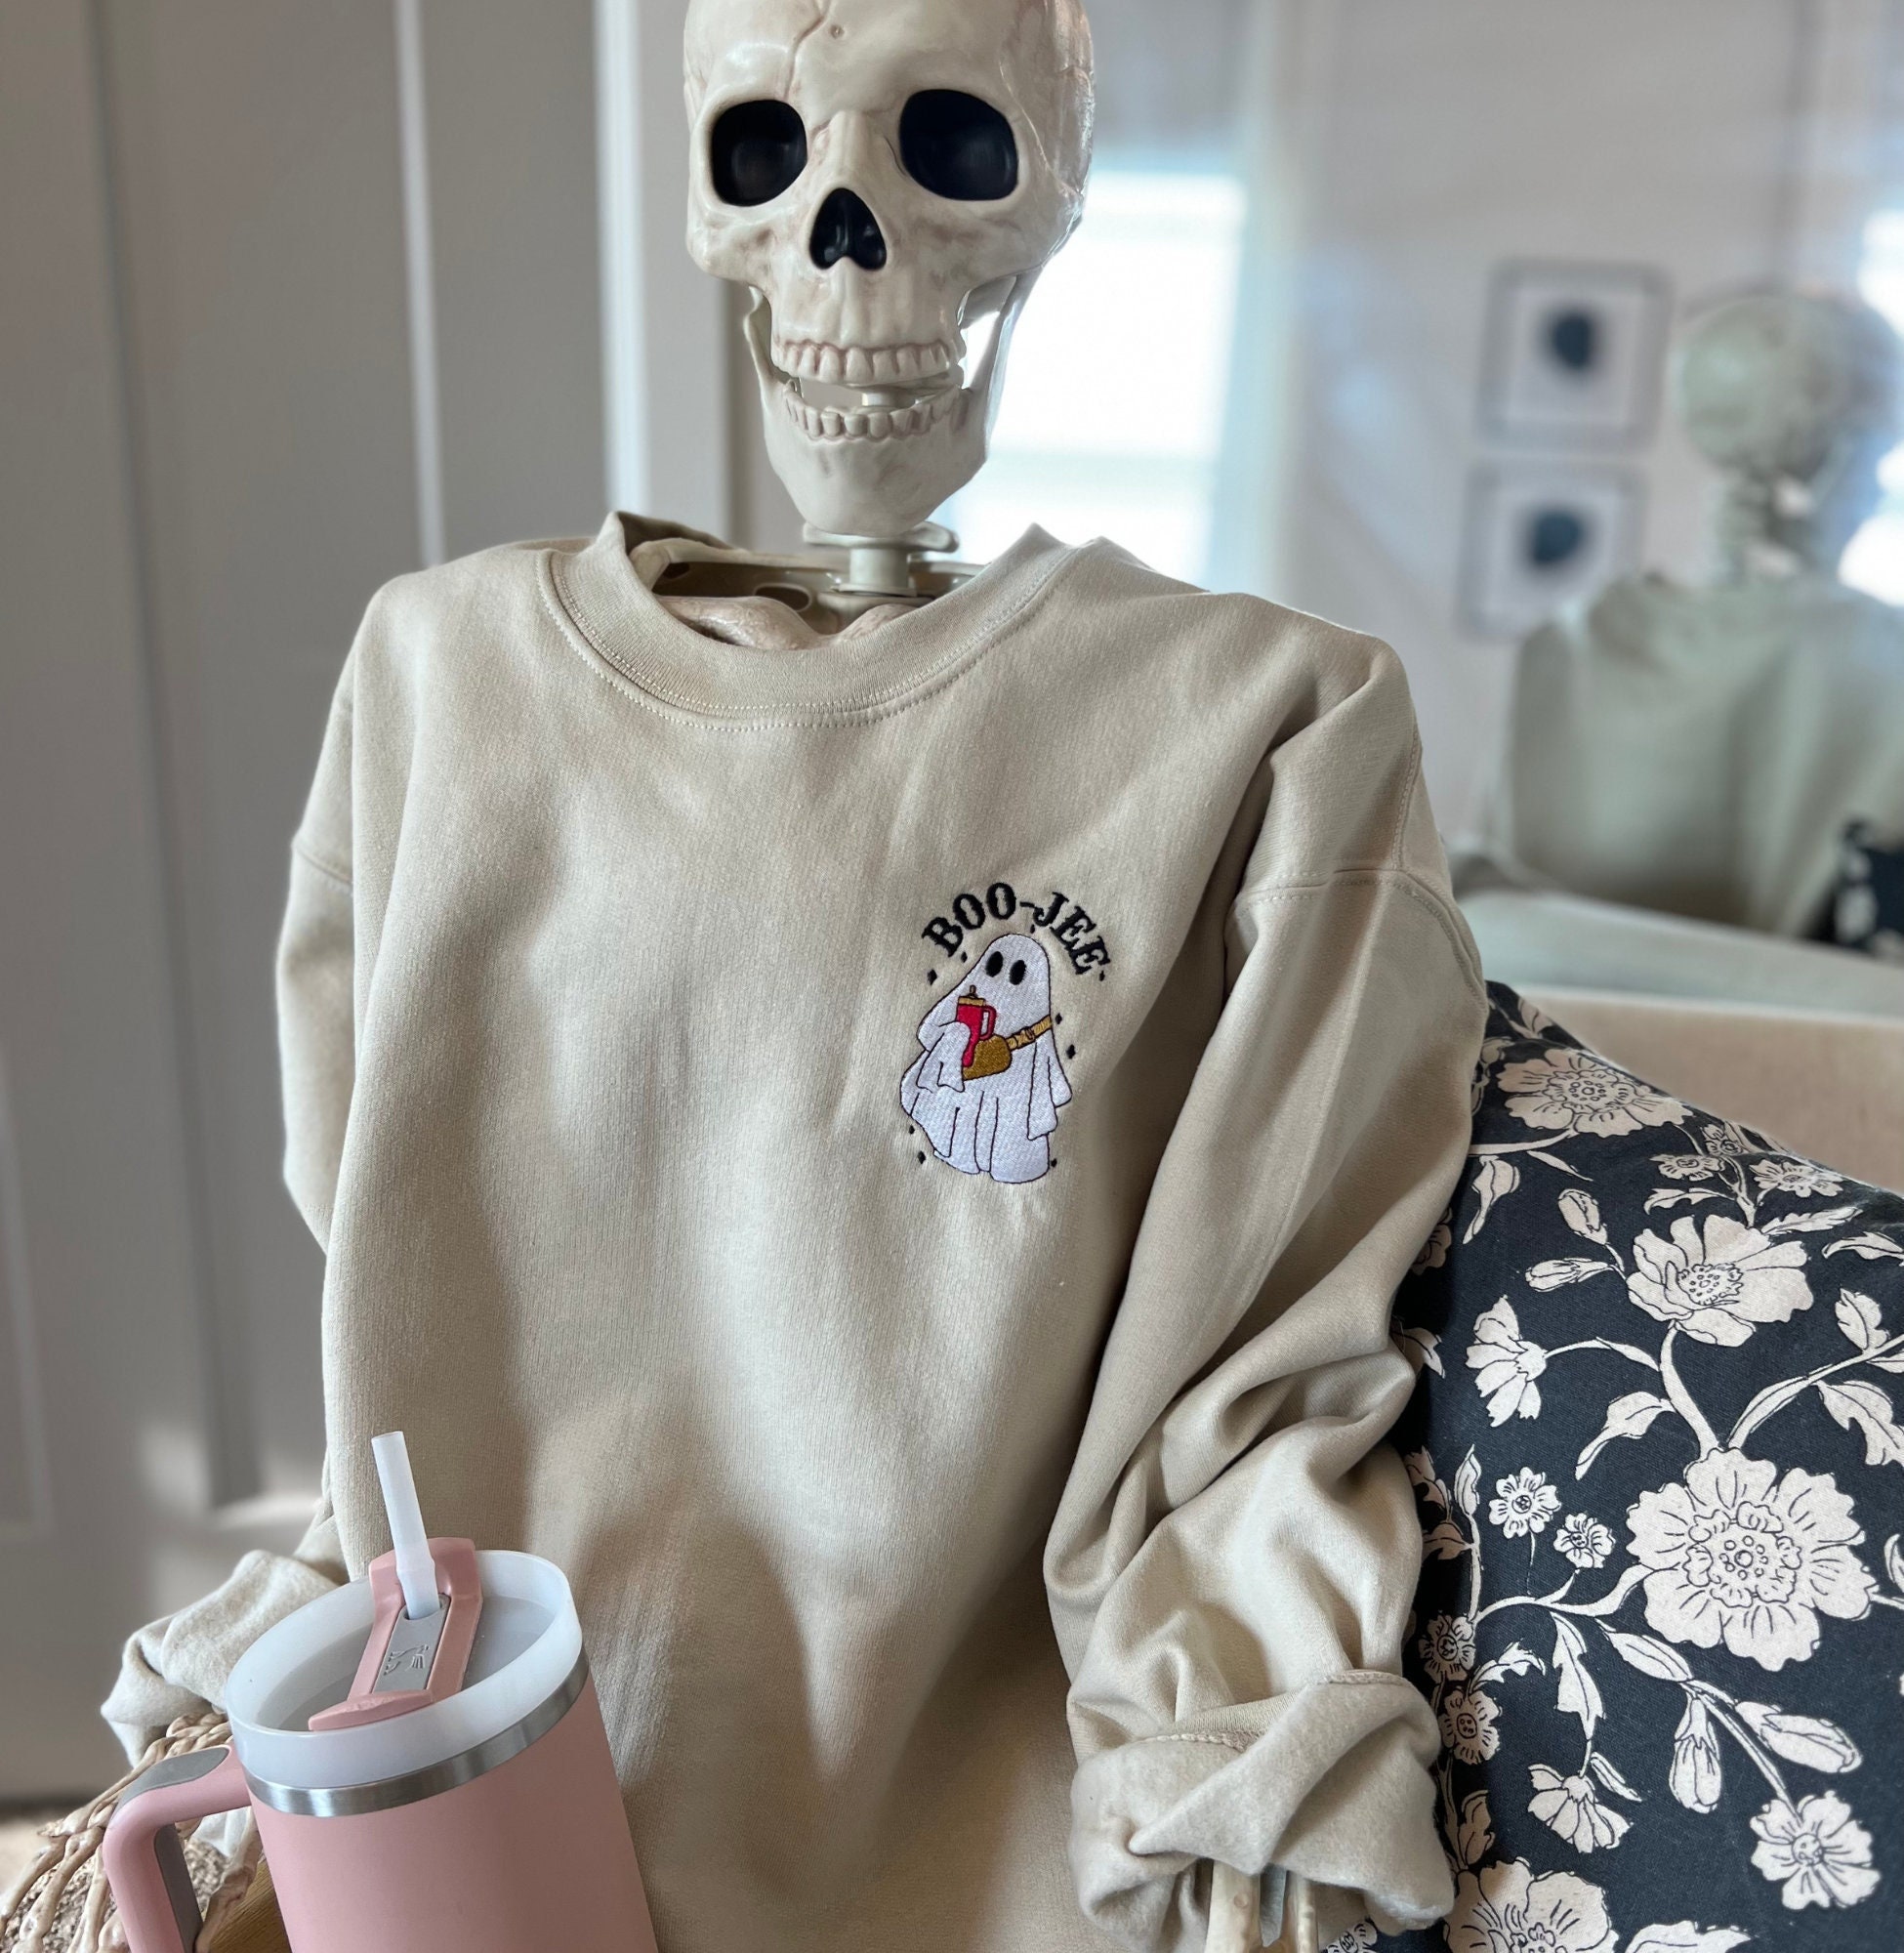 Funny Halloween Ghost Sweatshirt Boojee Ghost Shirt 